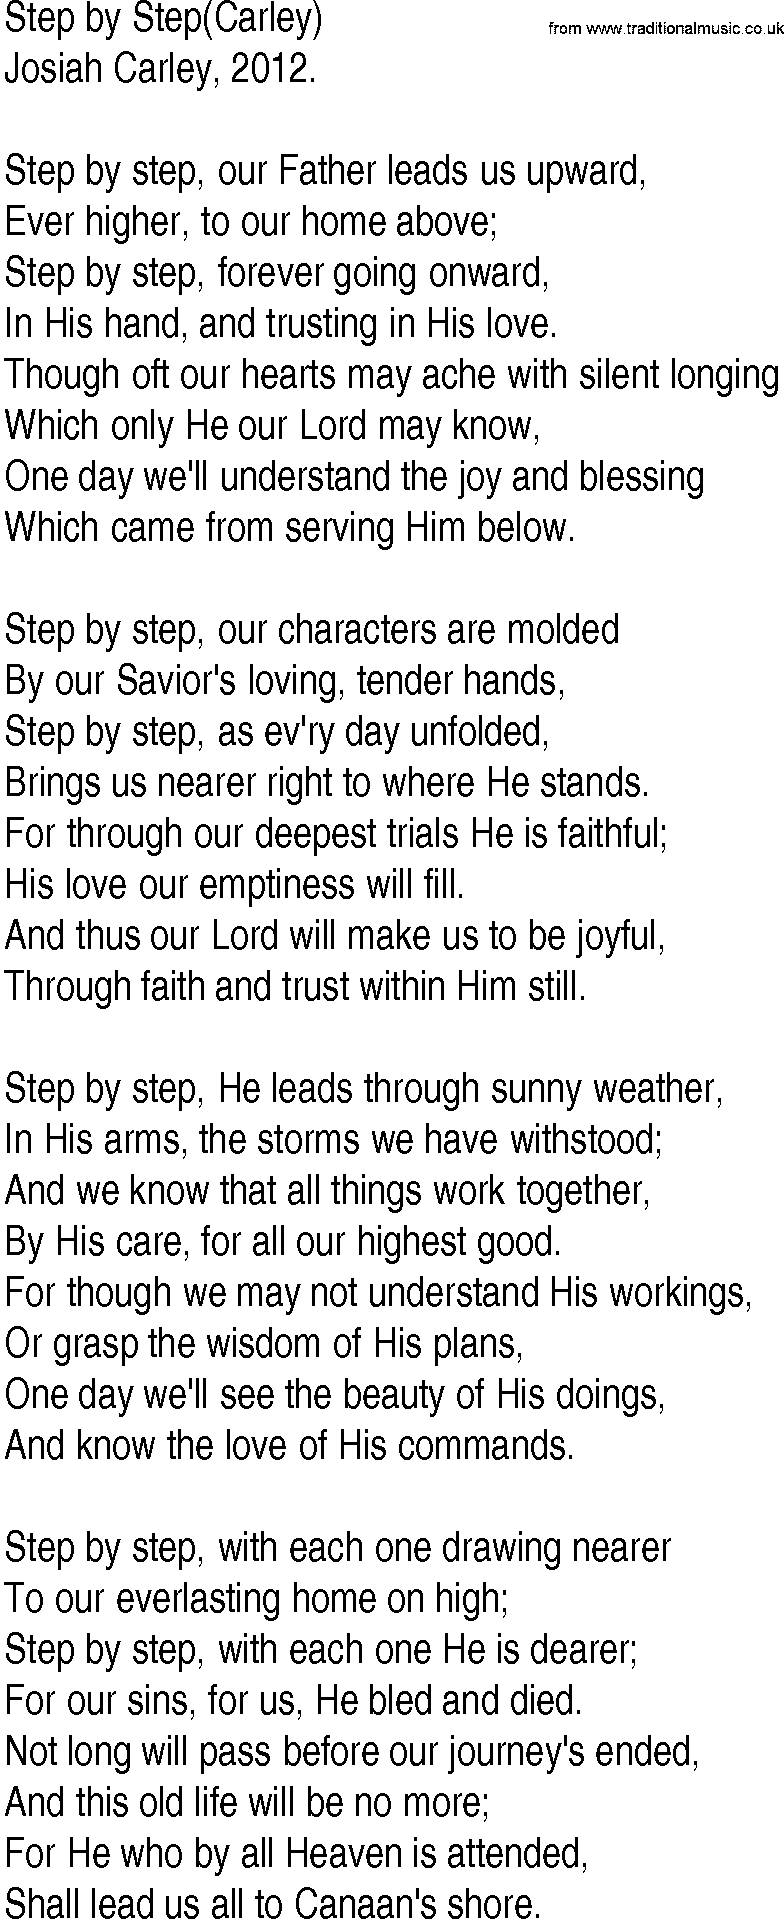 Hymn and Gospel Song: Step by Step(Carley) by Josiah Carley lyrics